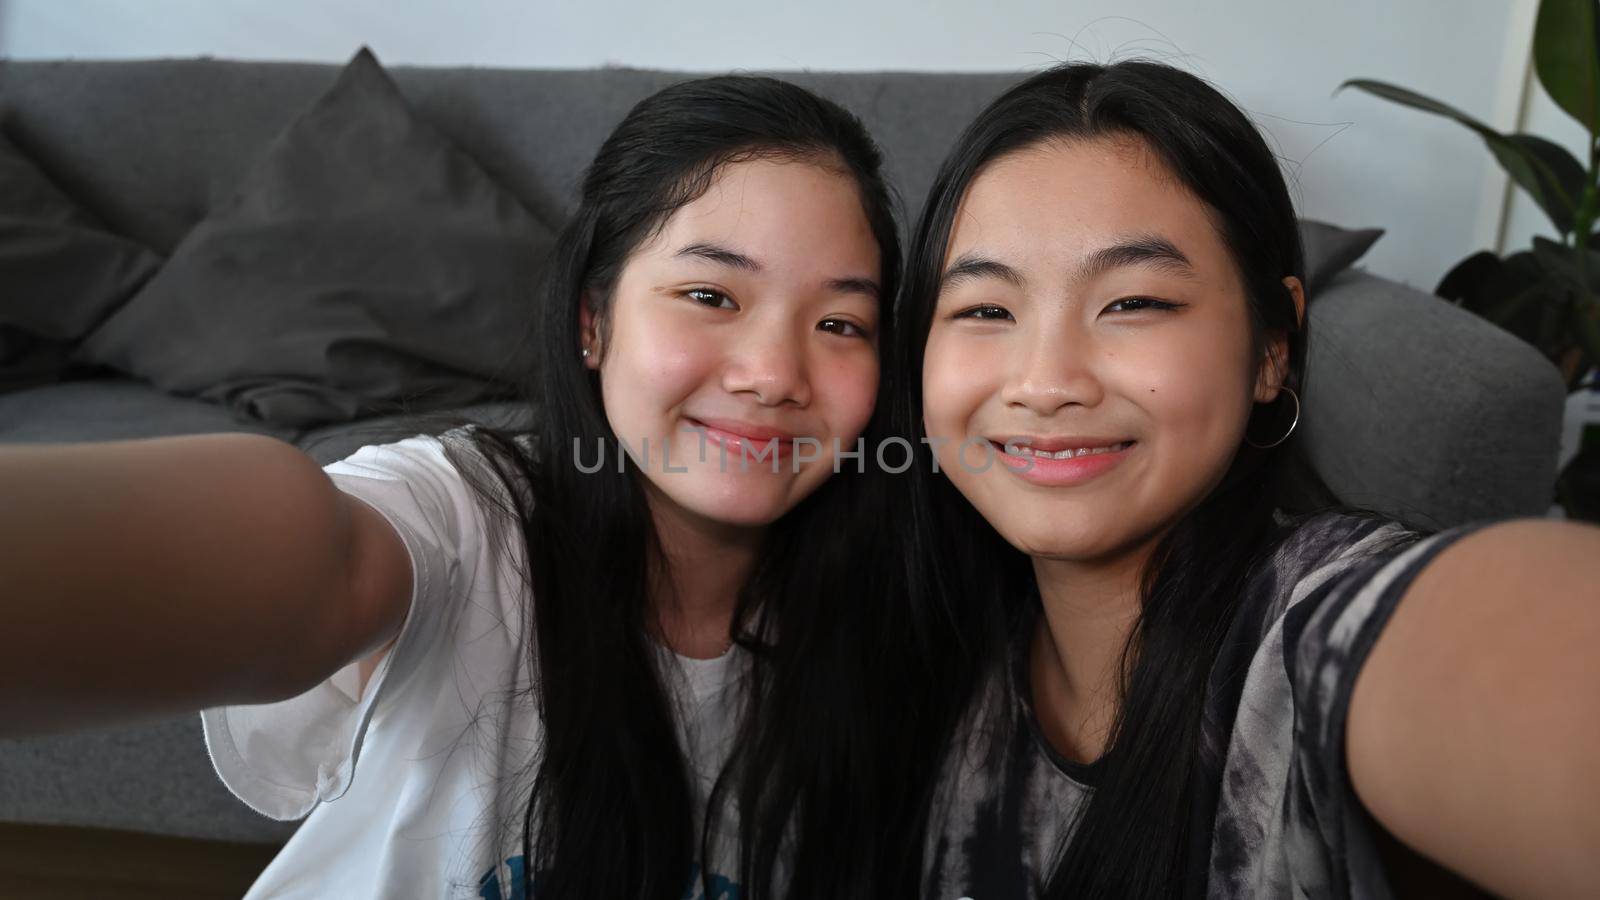 Joyful Asian girls looking at camera make selfie while sitting together in living room. by prathanchorruangsak